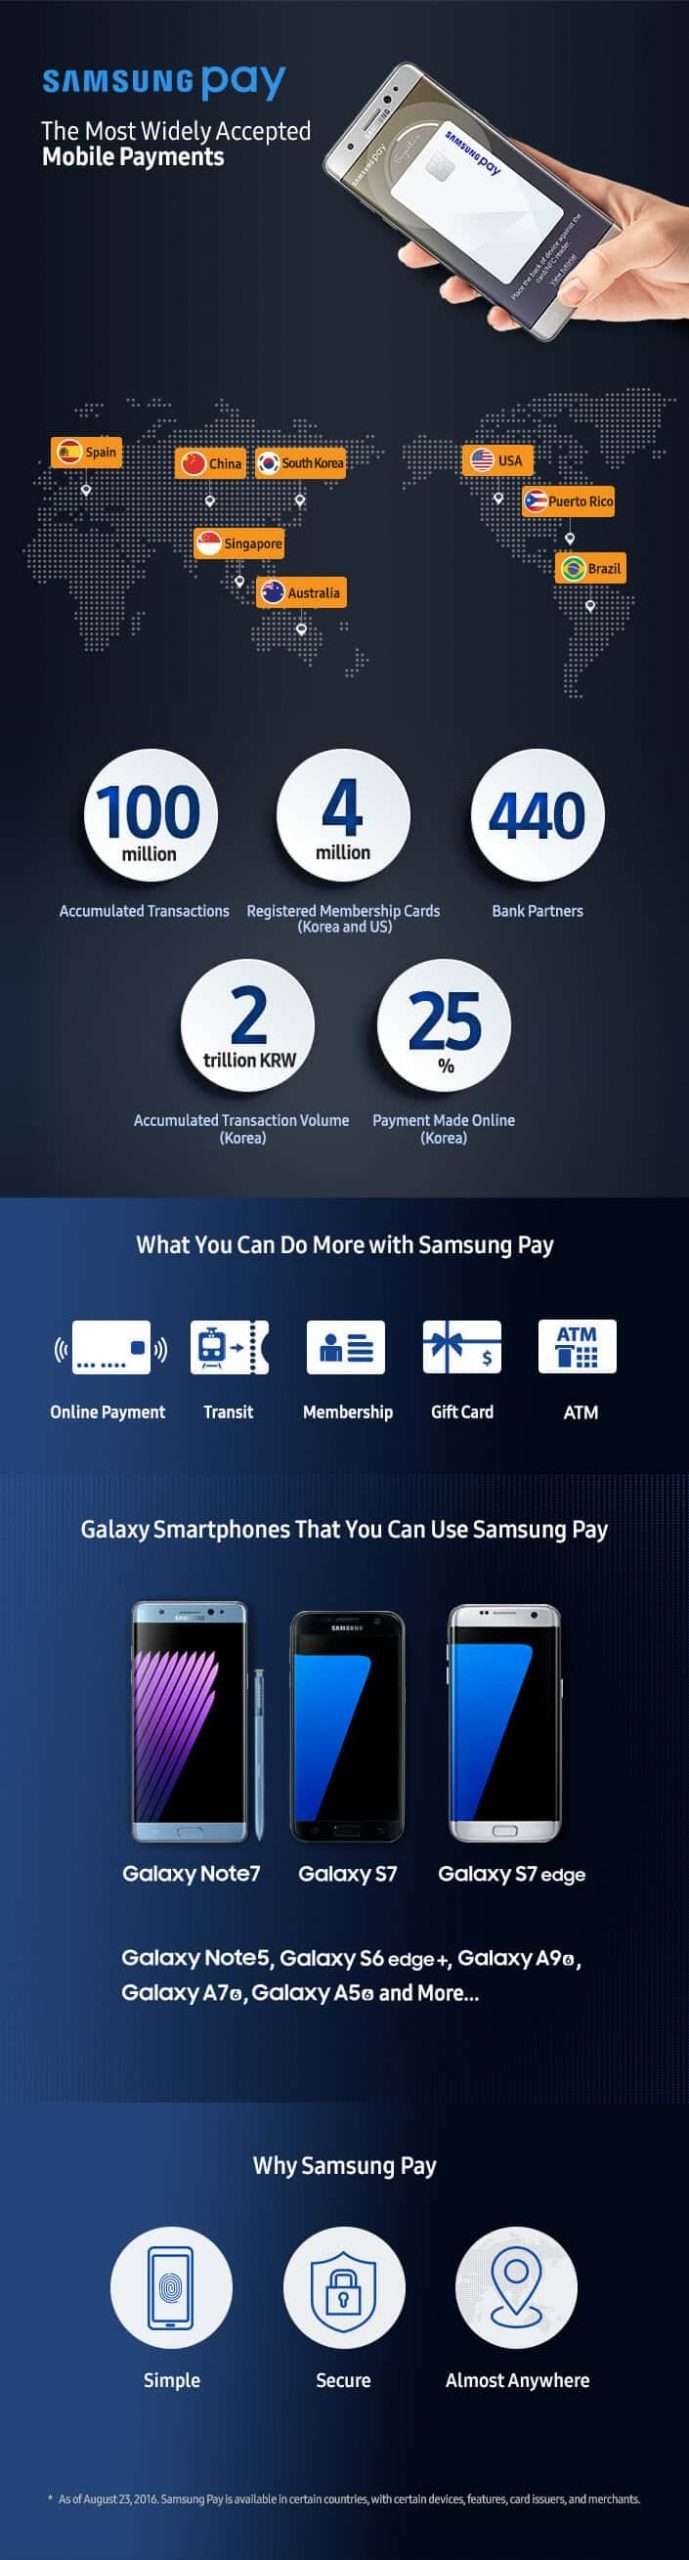 Samsung Pay | Samsung Australia